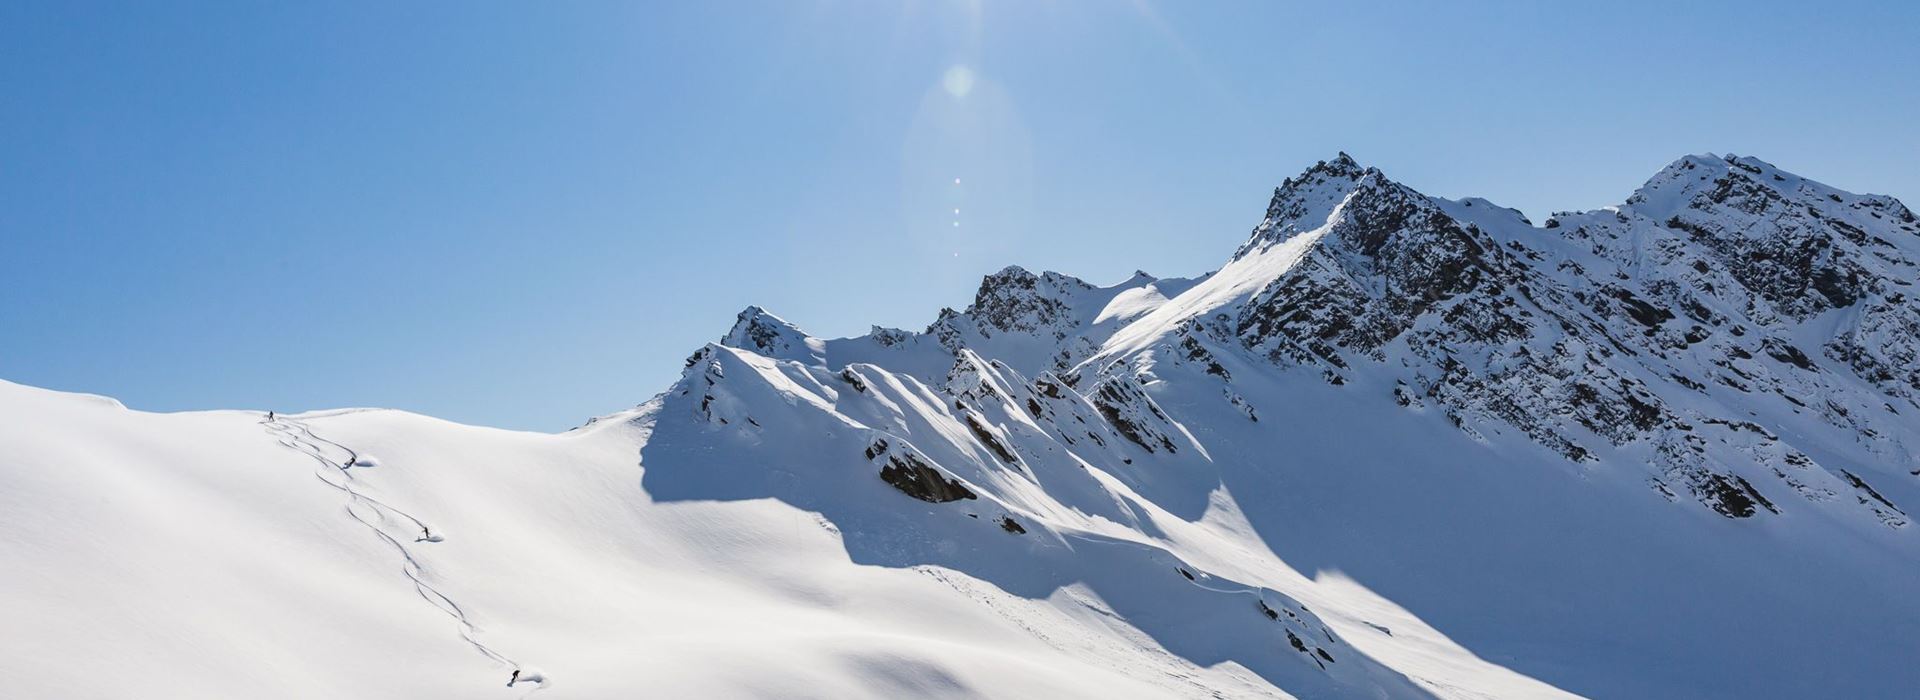 Luxury Skiing Holidays in New Zealand